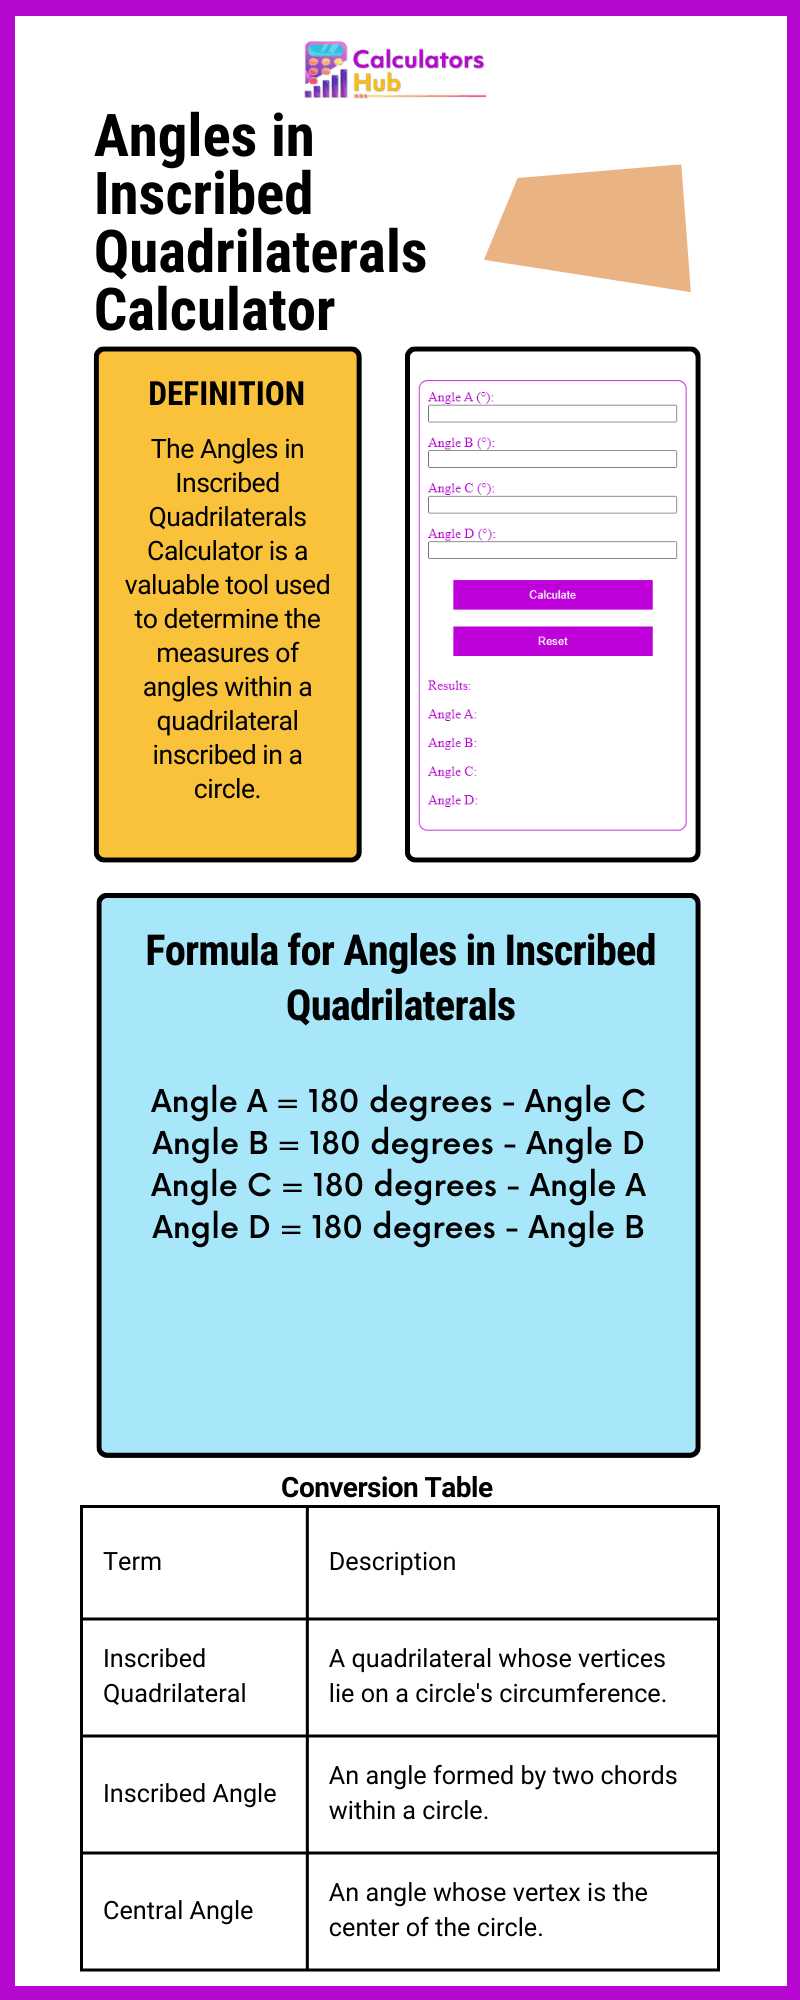 Angles in Inscribed Quadrilaterals Calculator